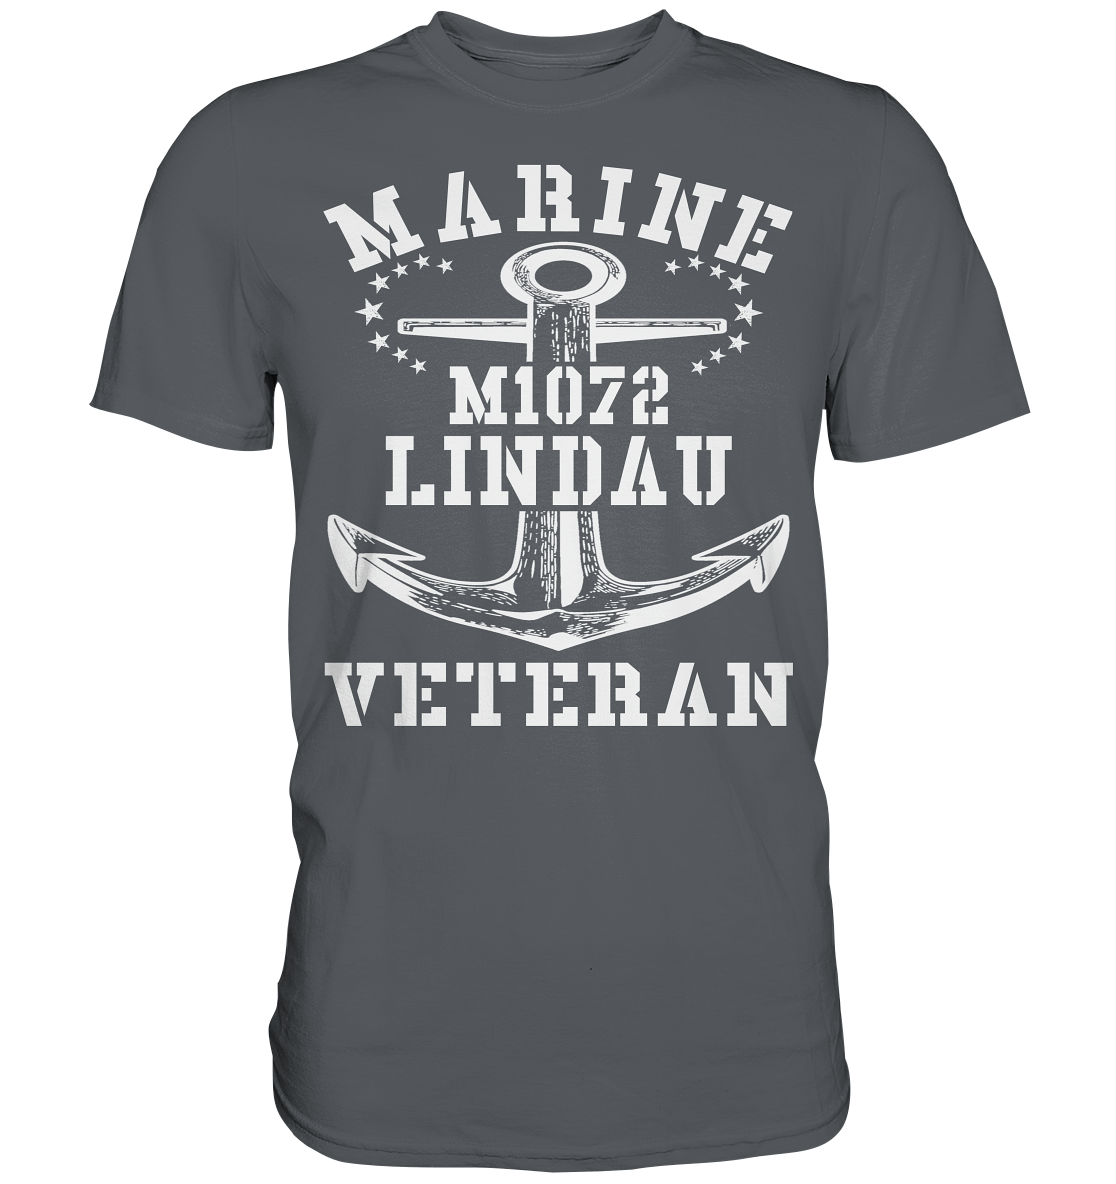 MARINE VETERAN M1072 LINDAU - Premium Shirt